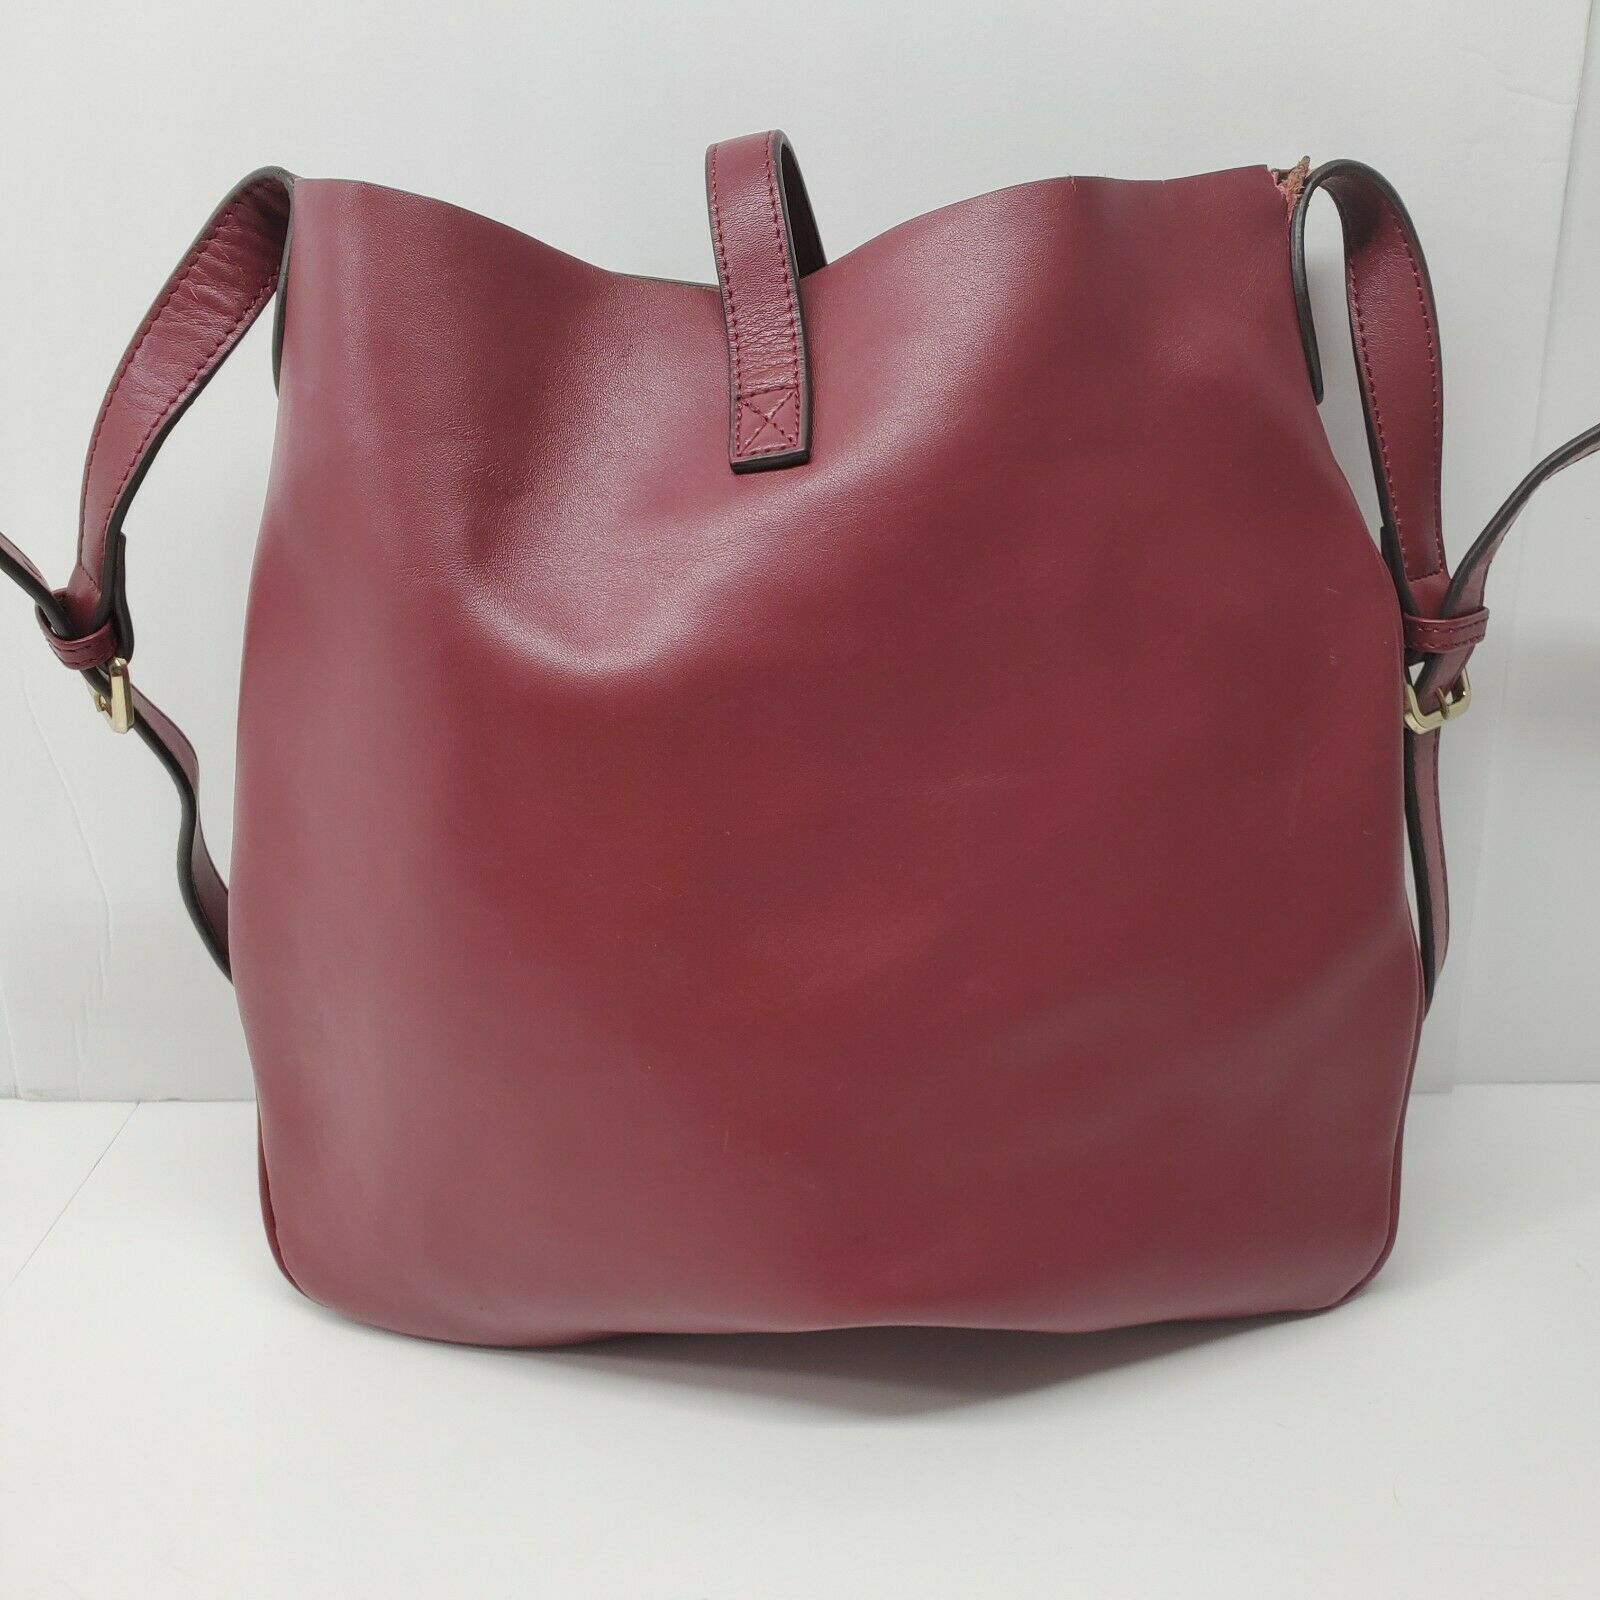 Co-Lab COLAB Christopher Kon Tote Bag Red Leather Handbag Purse Satchel ...